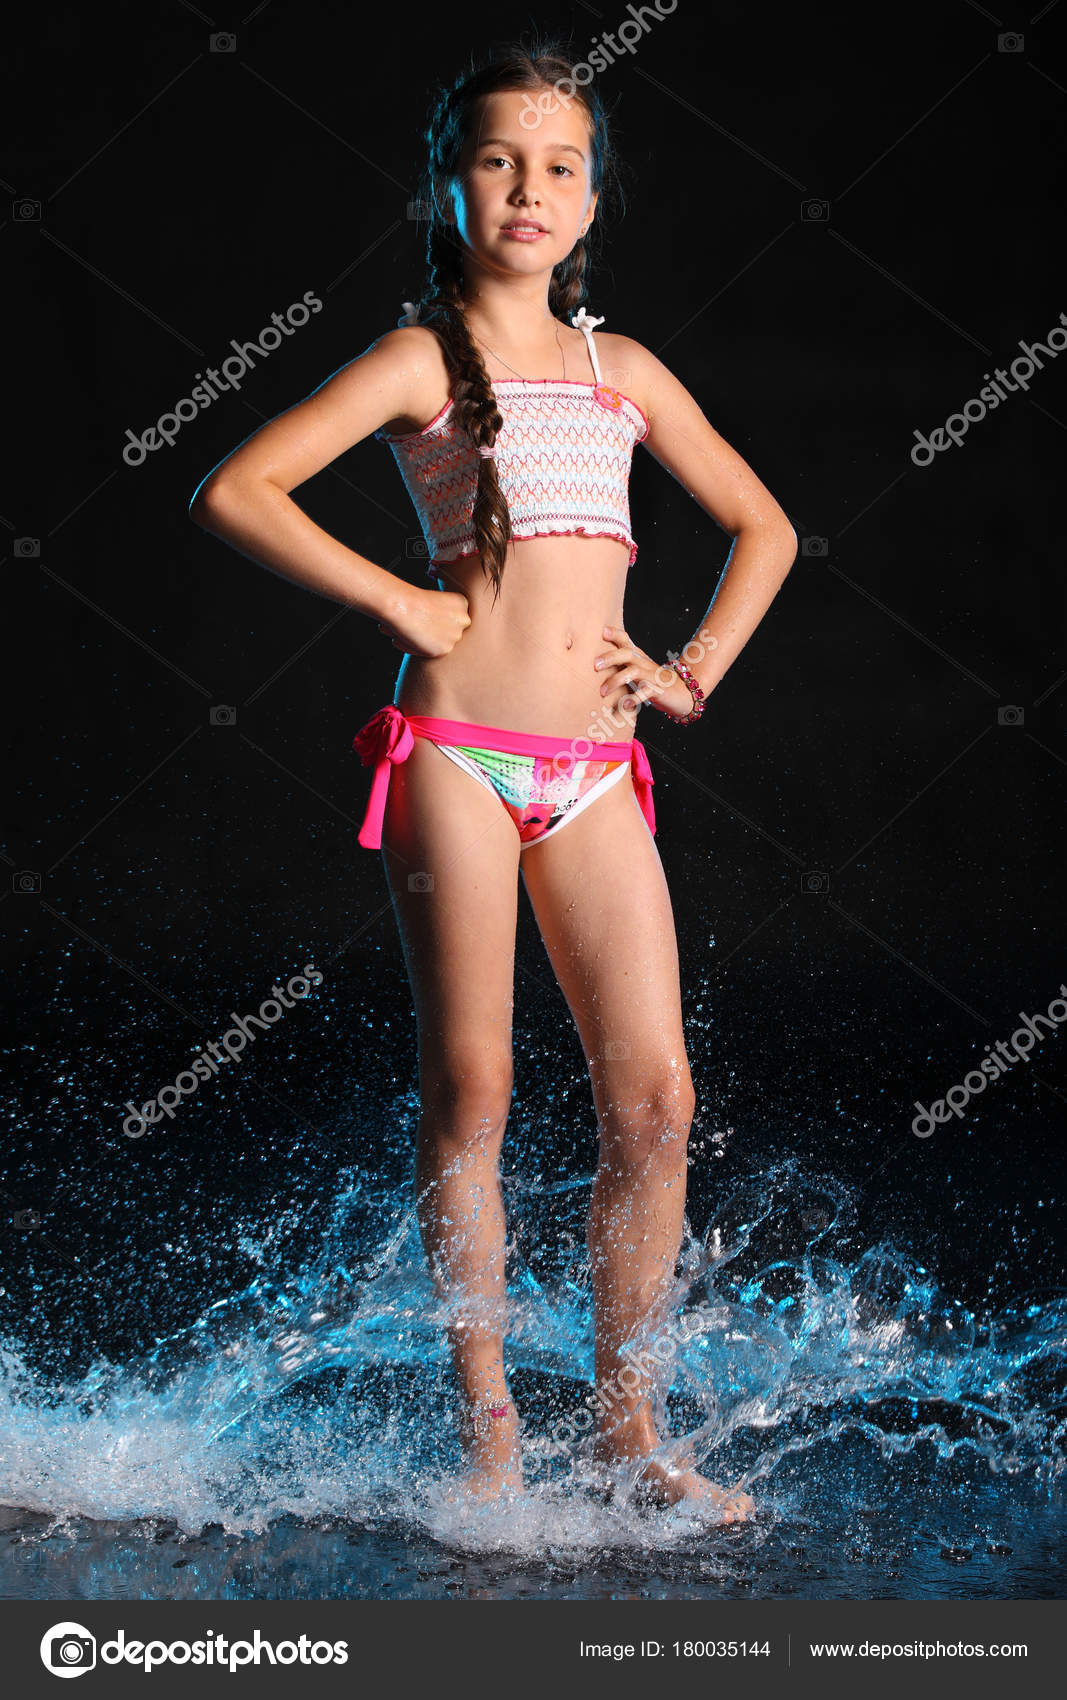 https://st3.depositphotos.com/1799830/18003/i/1600/depositphotos_180035144-stock-photo-adorable-young-teenage-girl-swimsuit.jpg